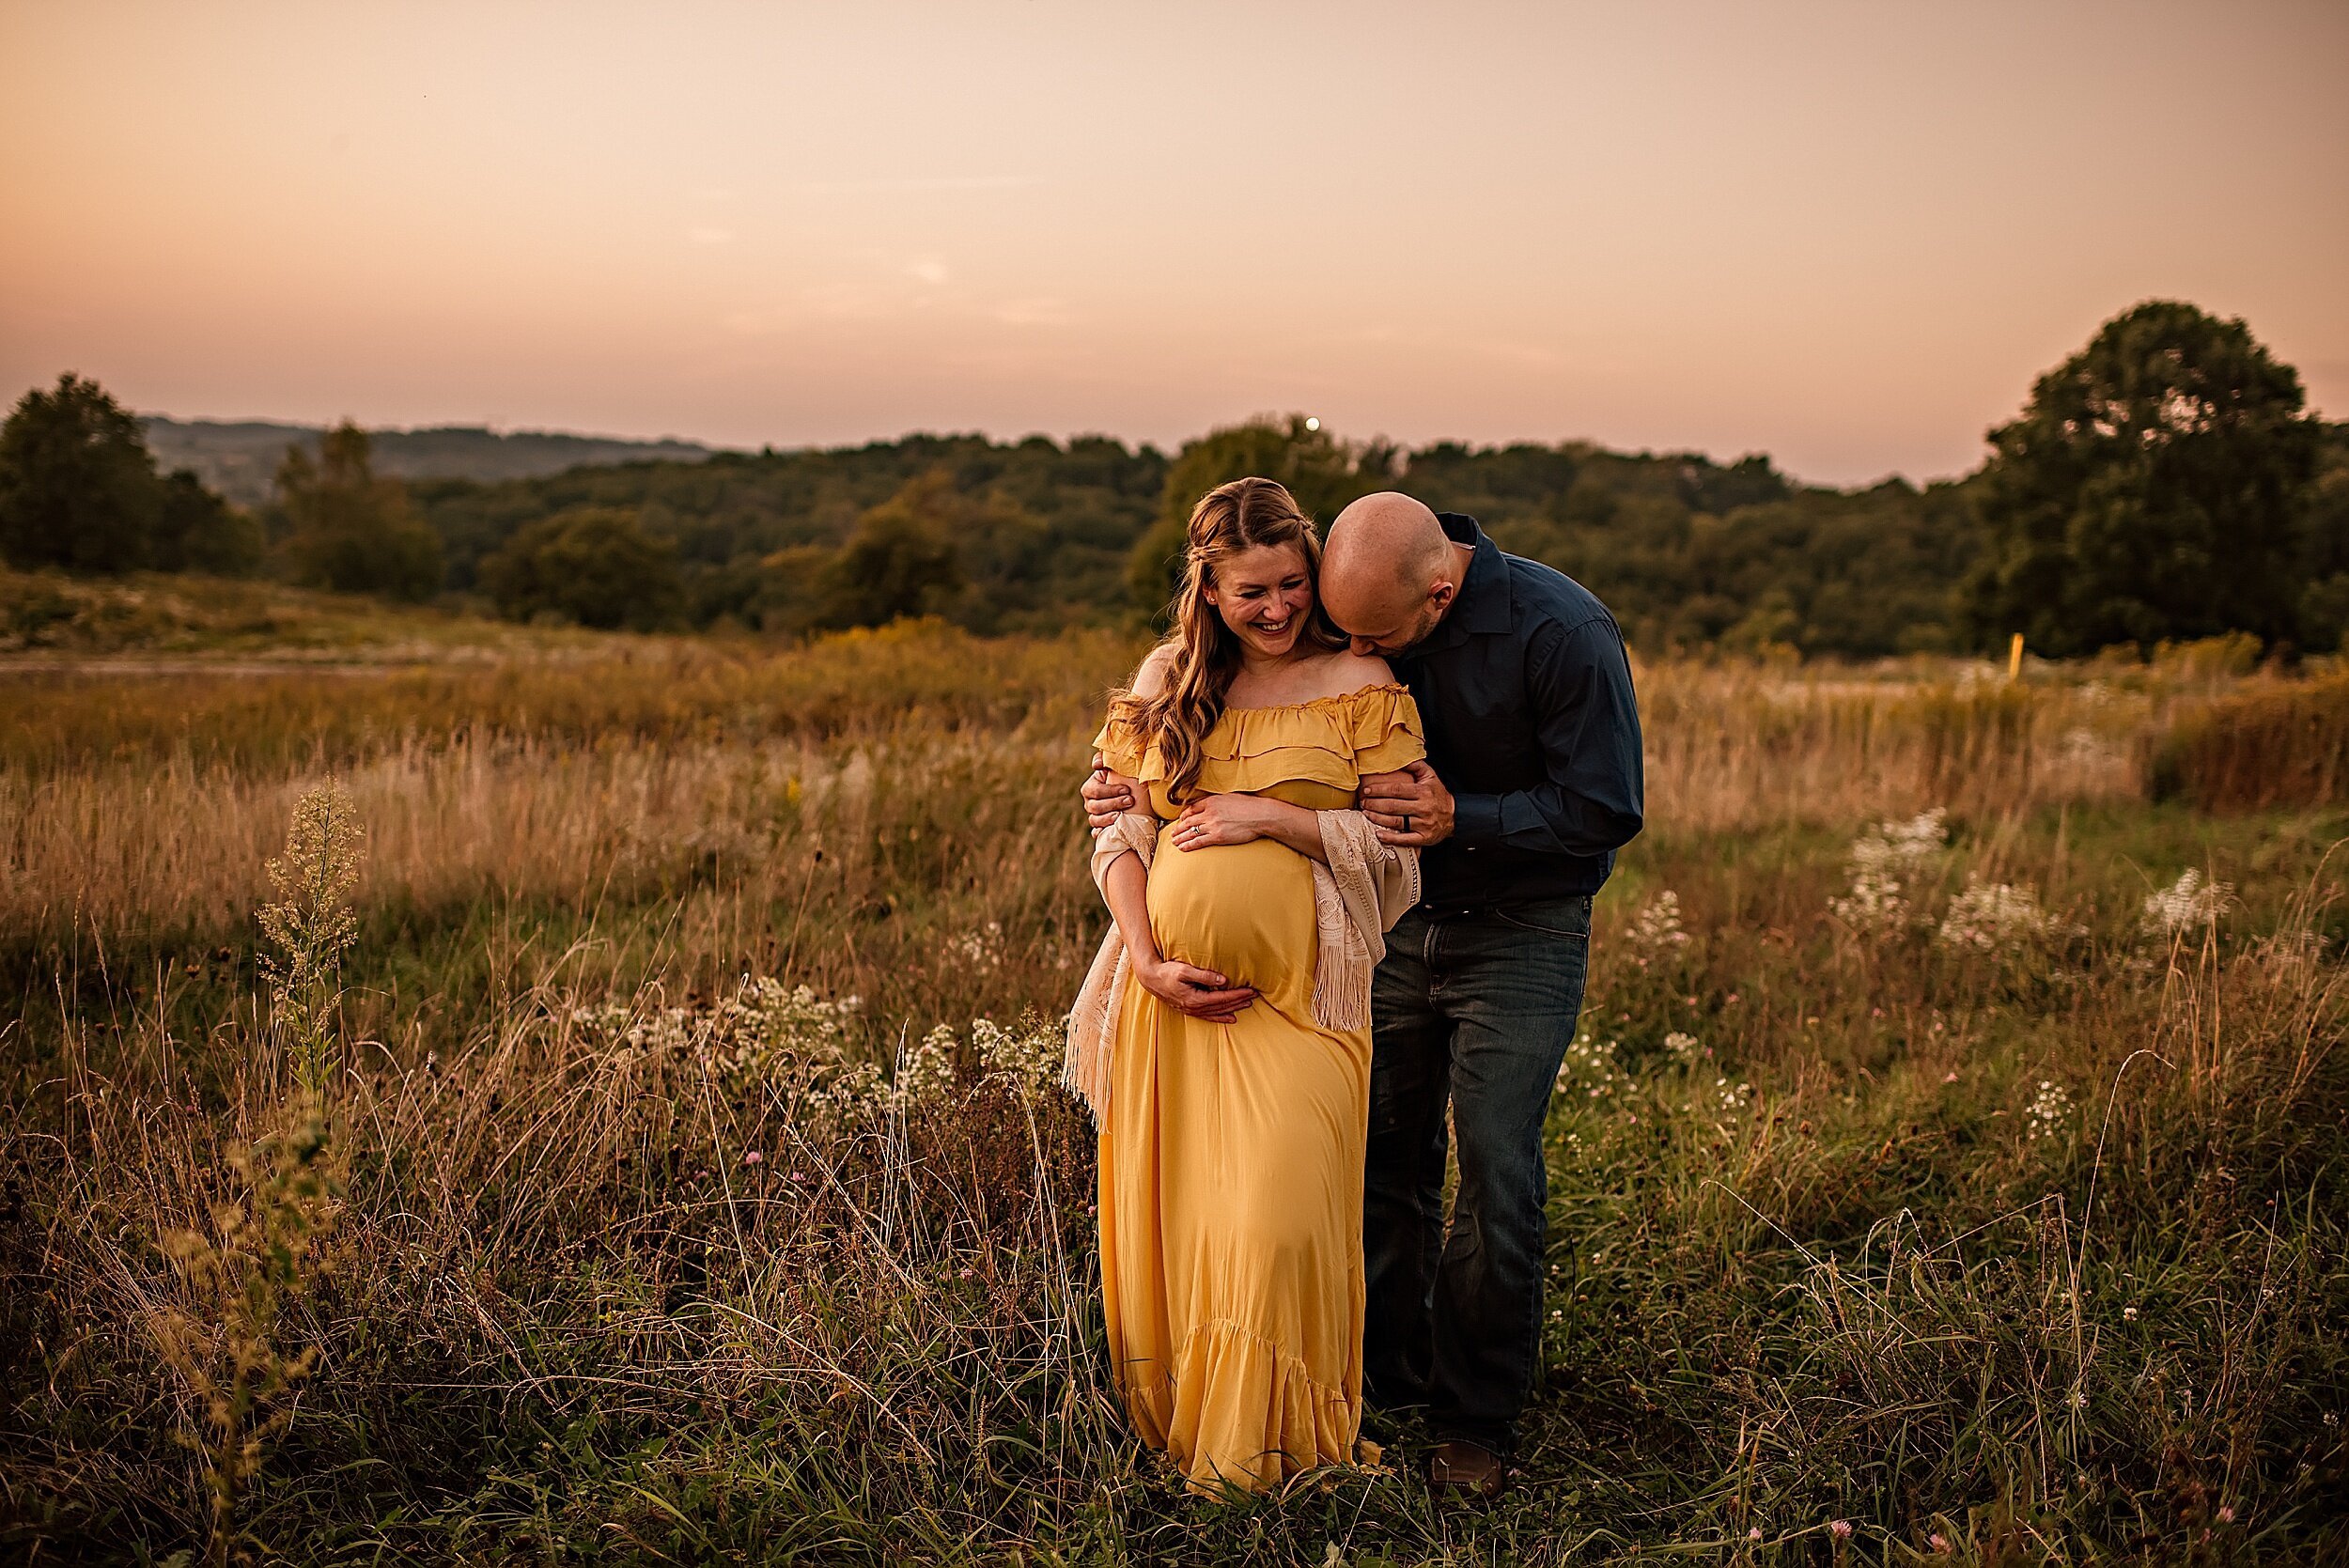 canton-ohio-family-frye-family-park-maternity-session-outdoor-sunset-fields-lauren-grayson-photography_0128.jpeg